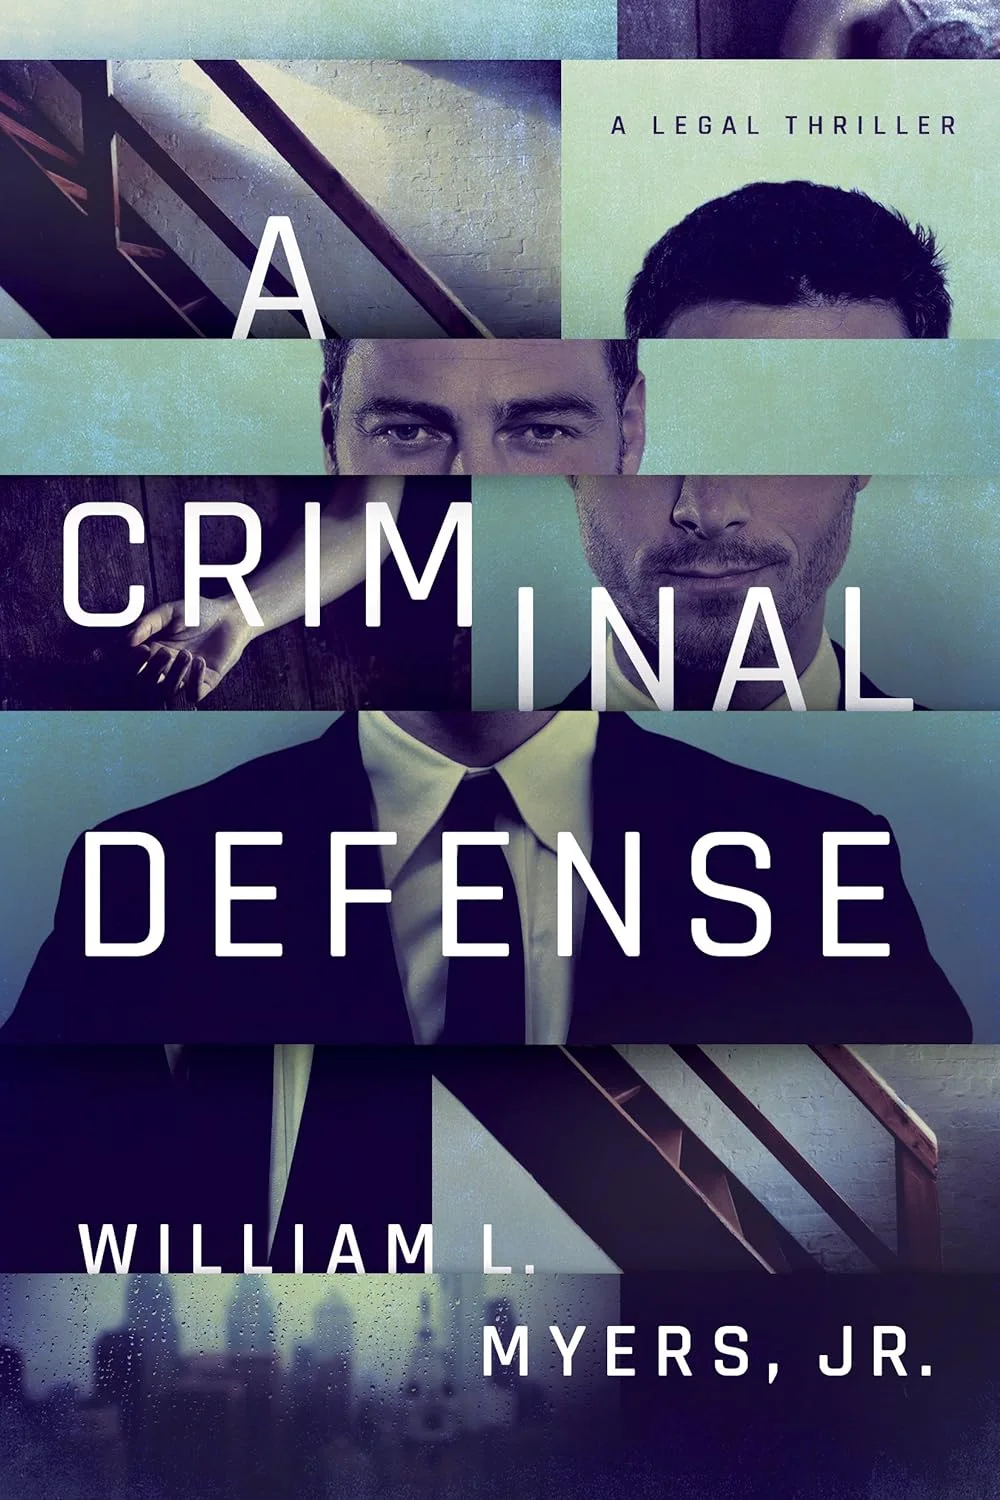 A Criminal Defense by William L. Myers, Jr.